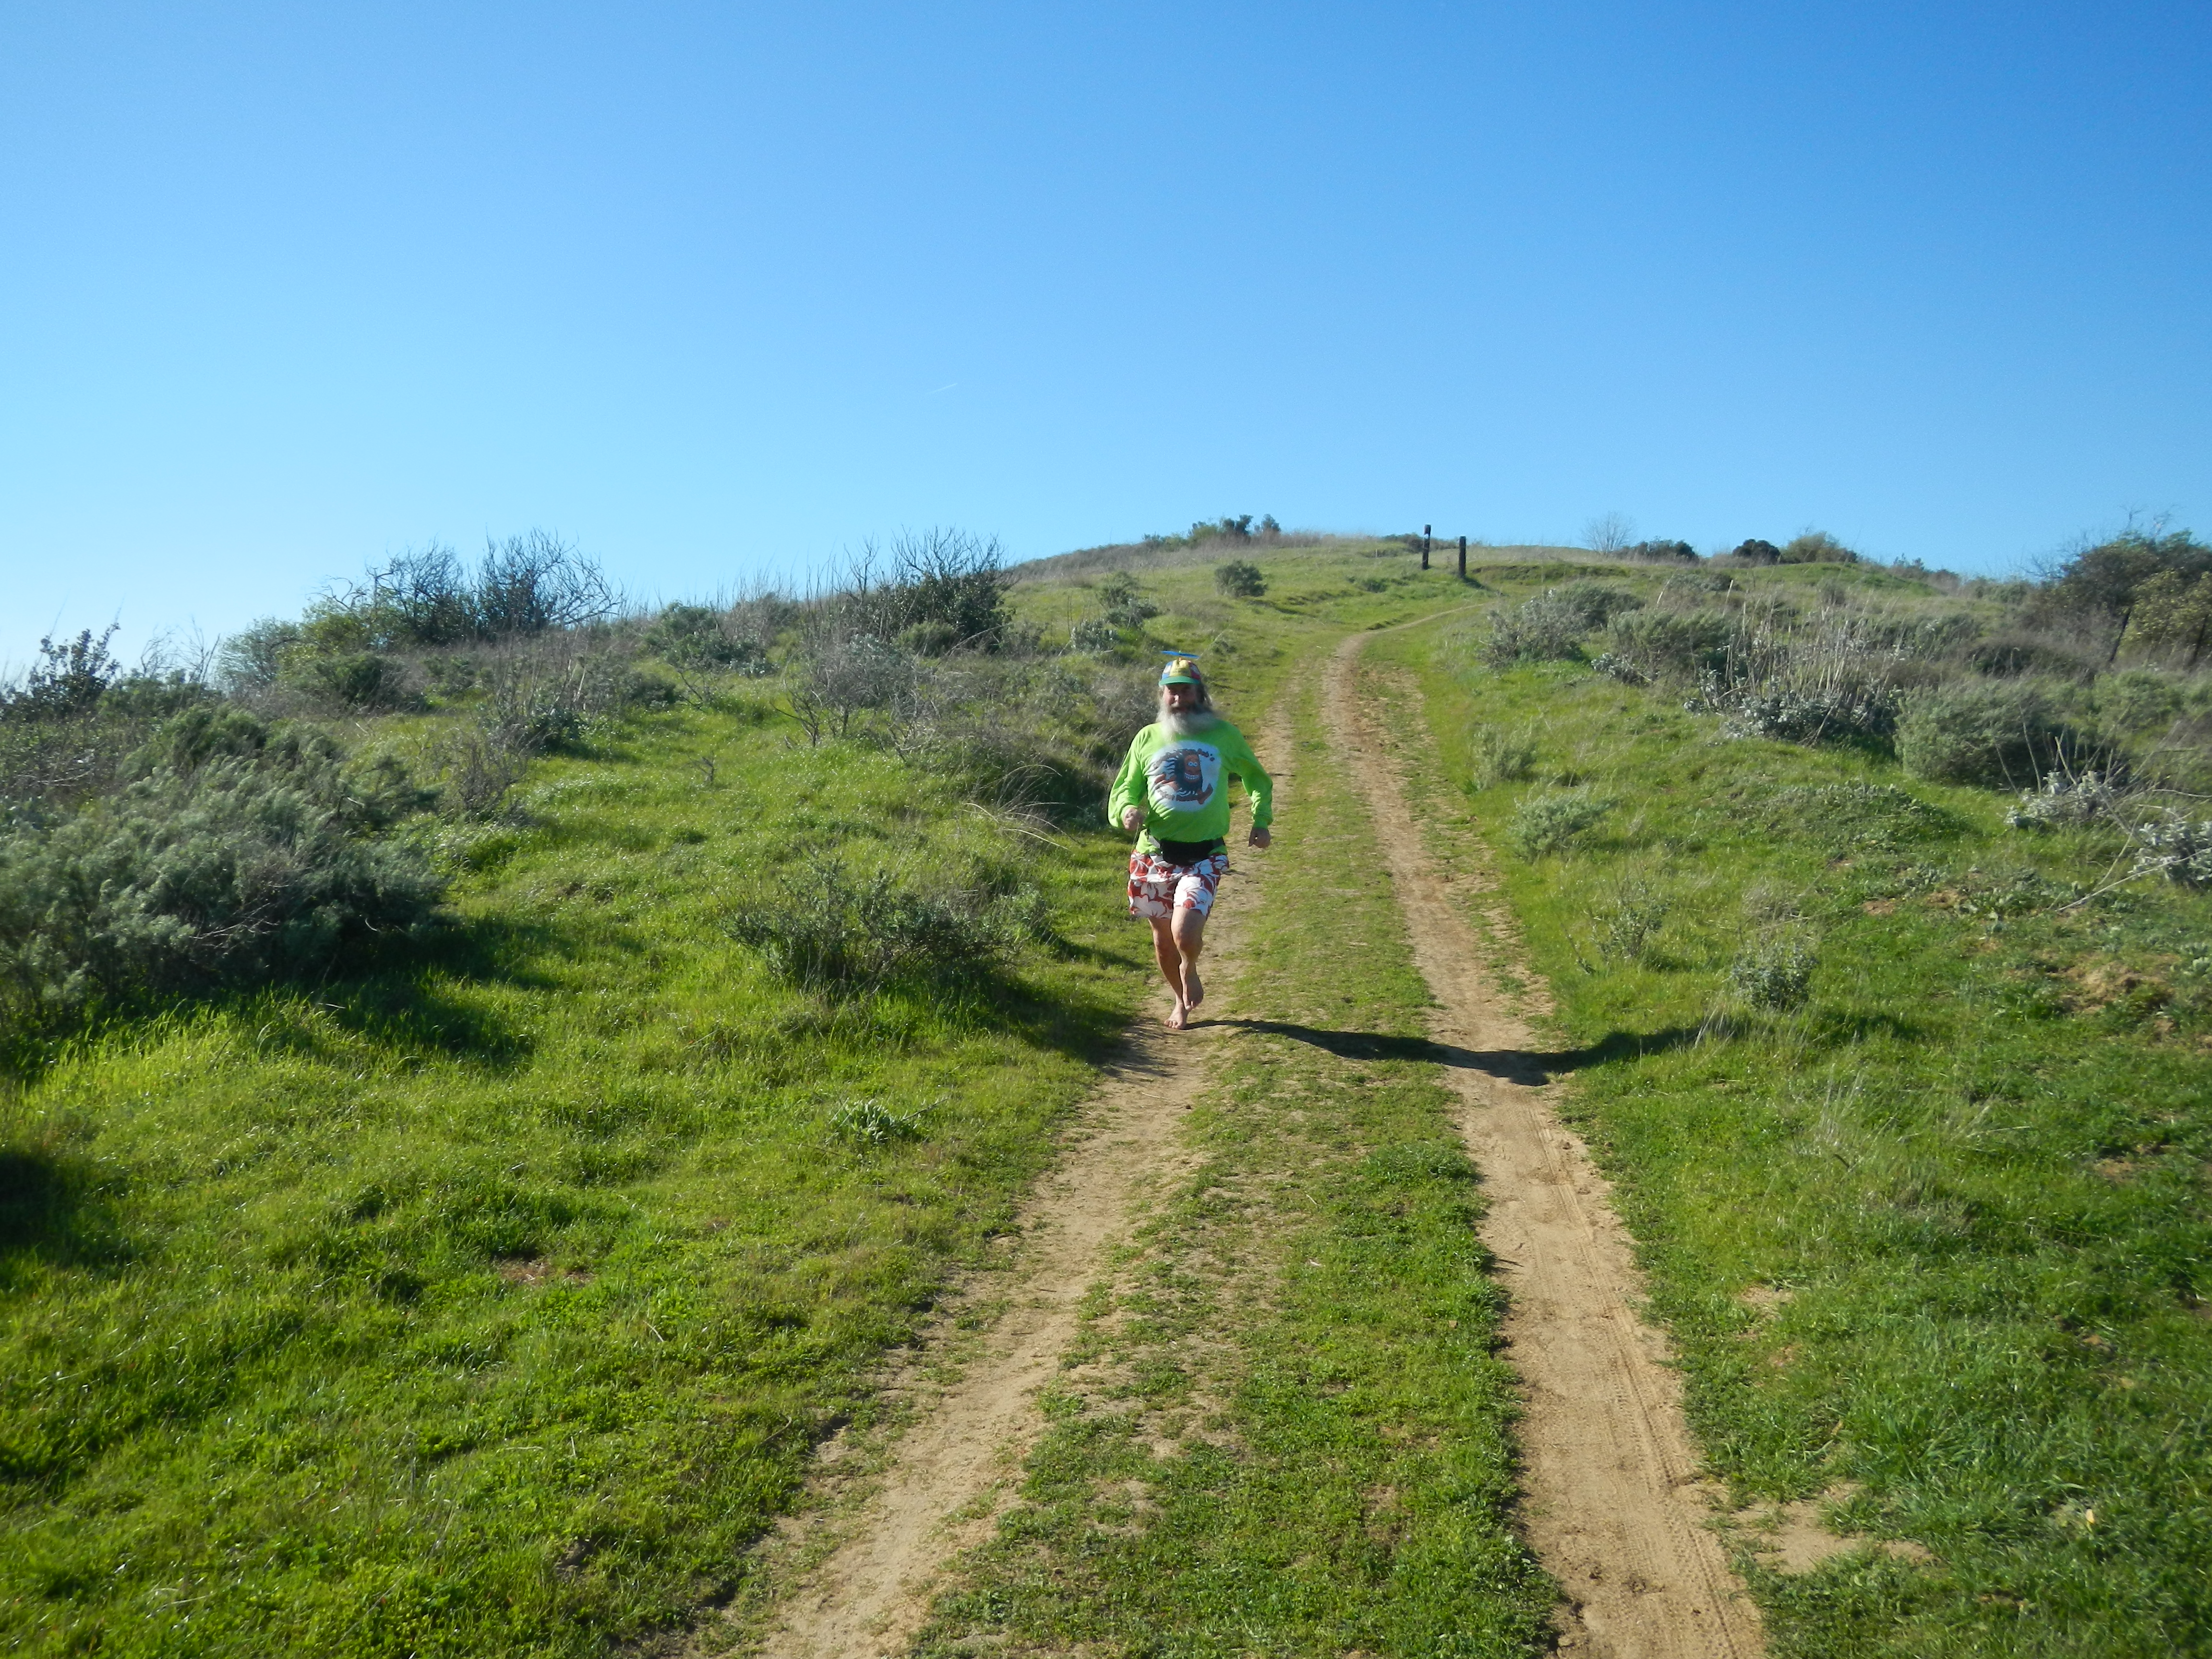 Ken Bob running on Chino Hills Trails